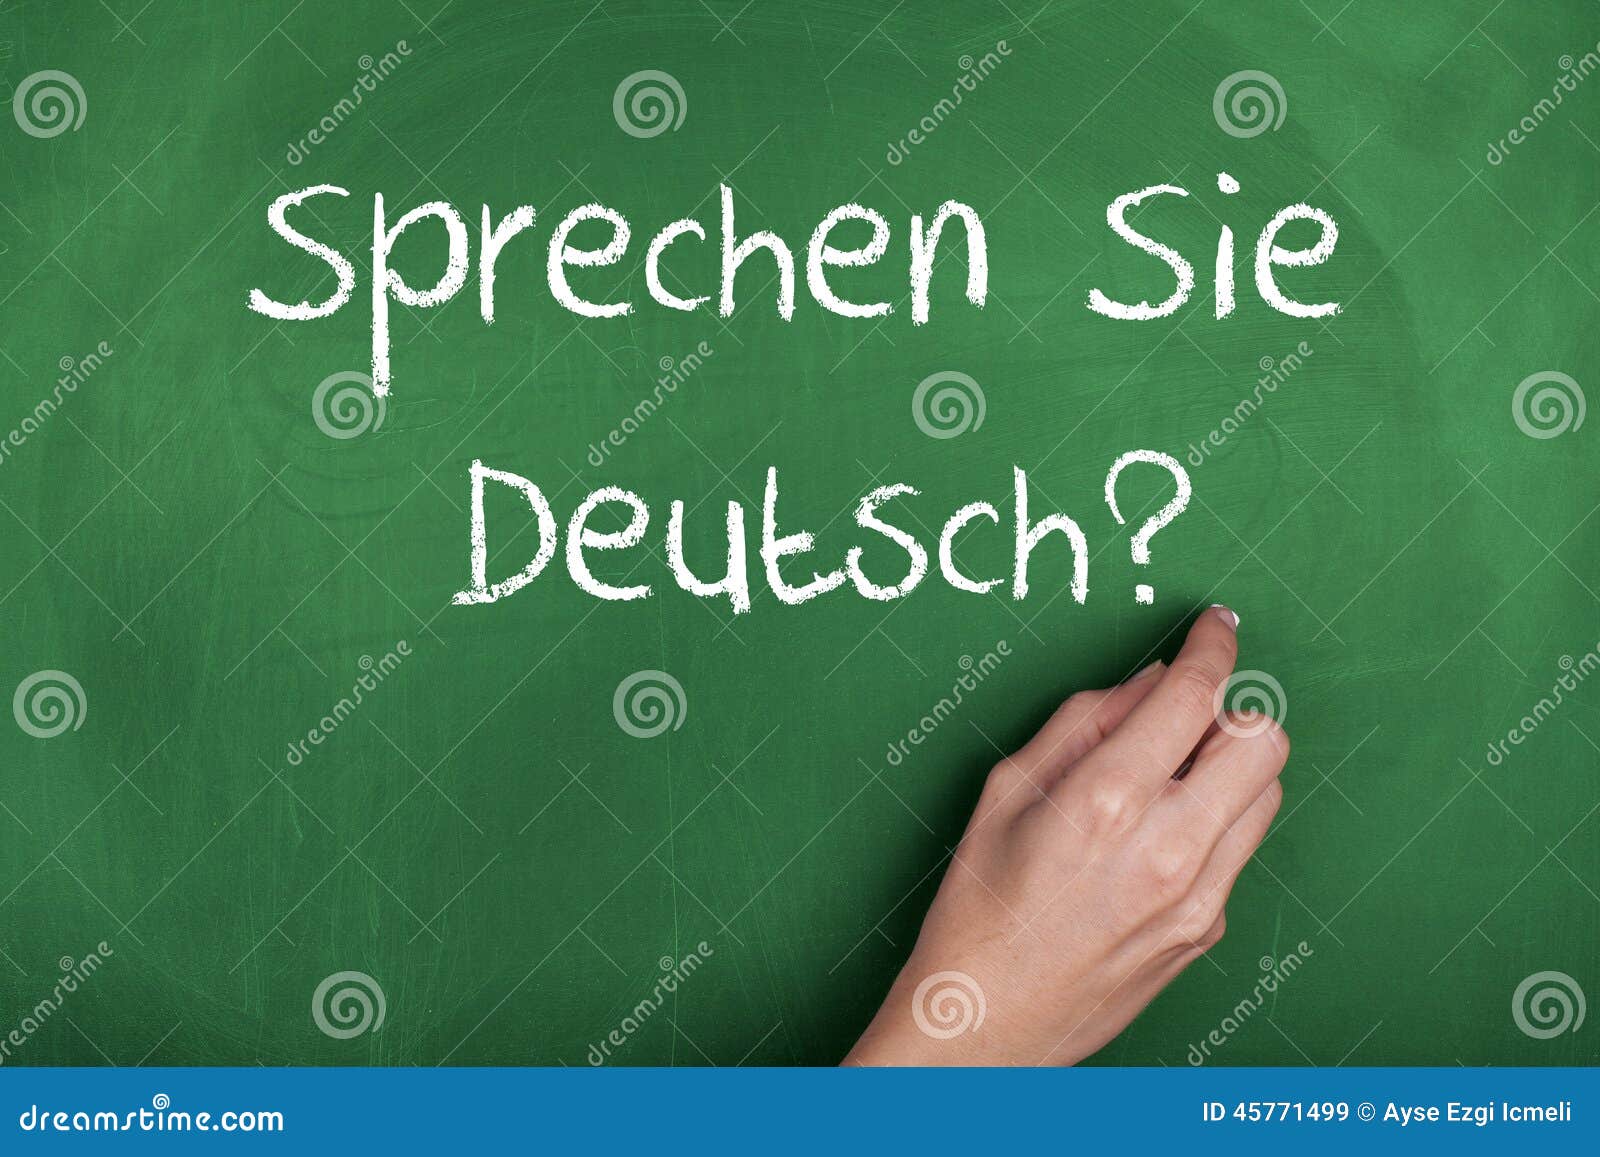 German Language Learning Stock Photo | CartoonDealer.com ...